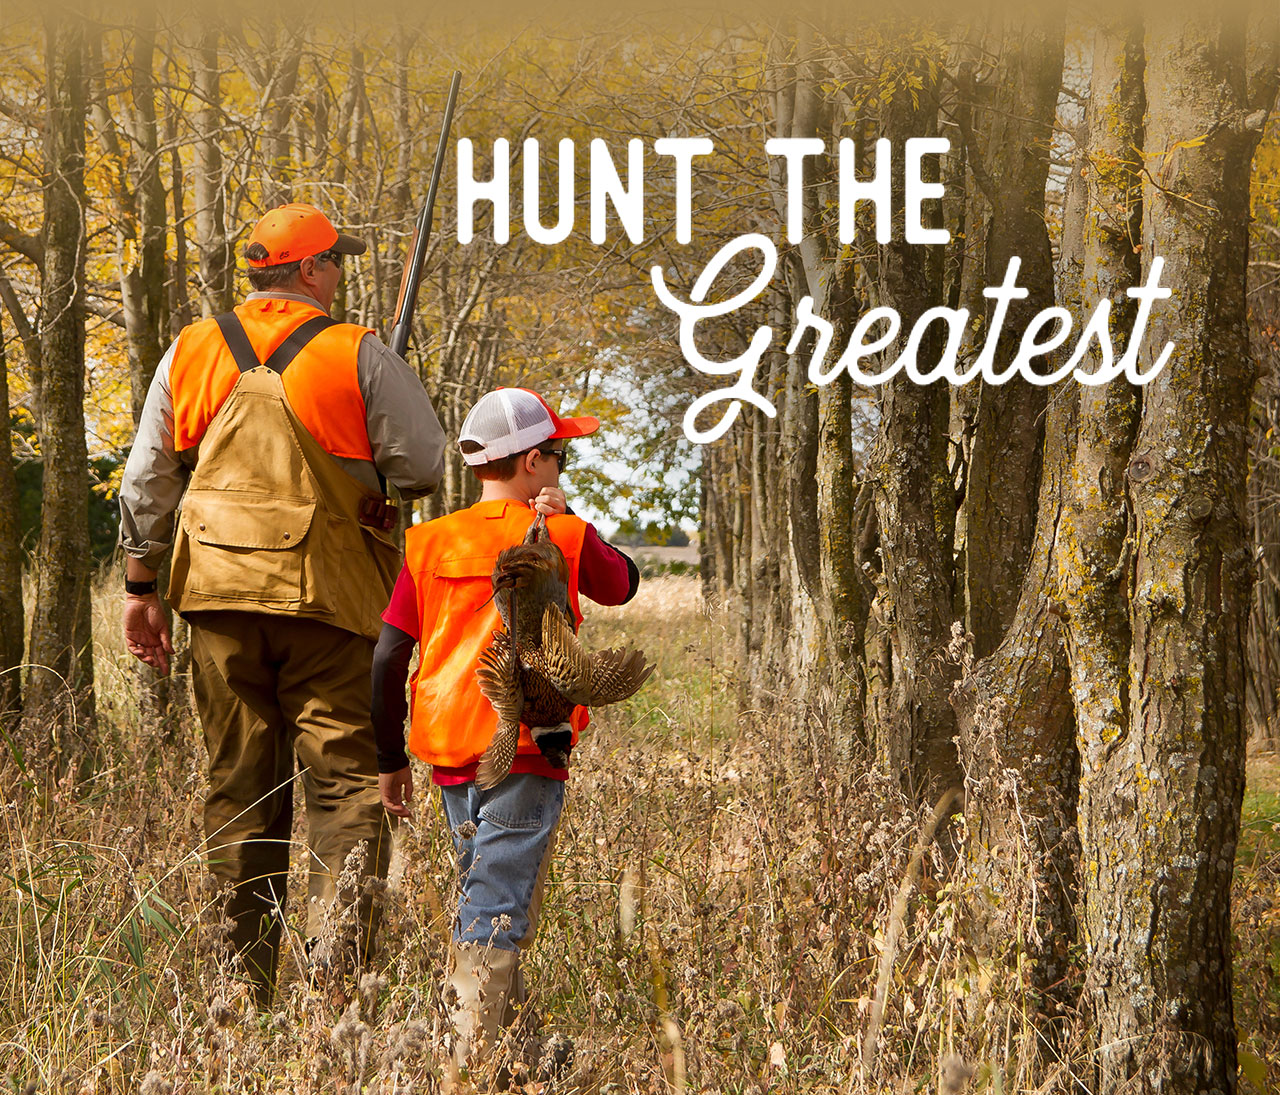 South Dakota - Hunt the Greatest